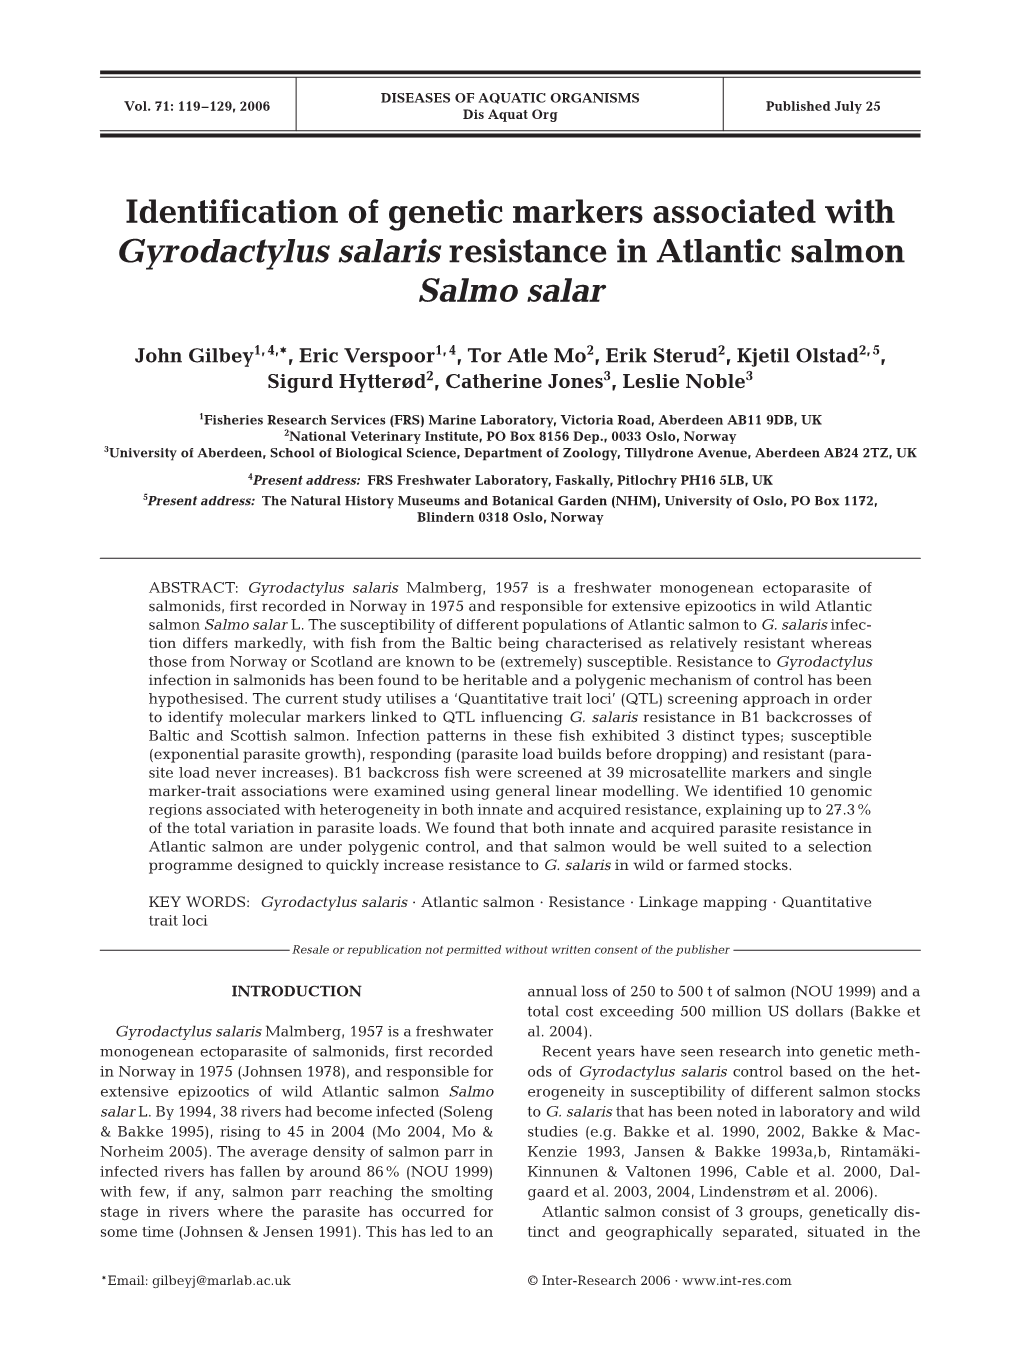 Identification of Genetic Markers Associated with Gyrodactylus Salaris Resistance in Atlantic Salmon Salmo Salar